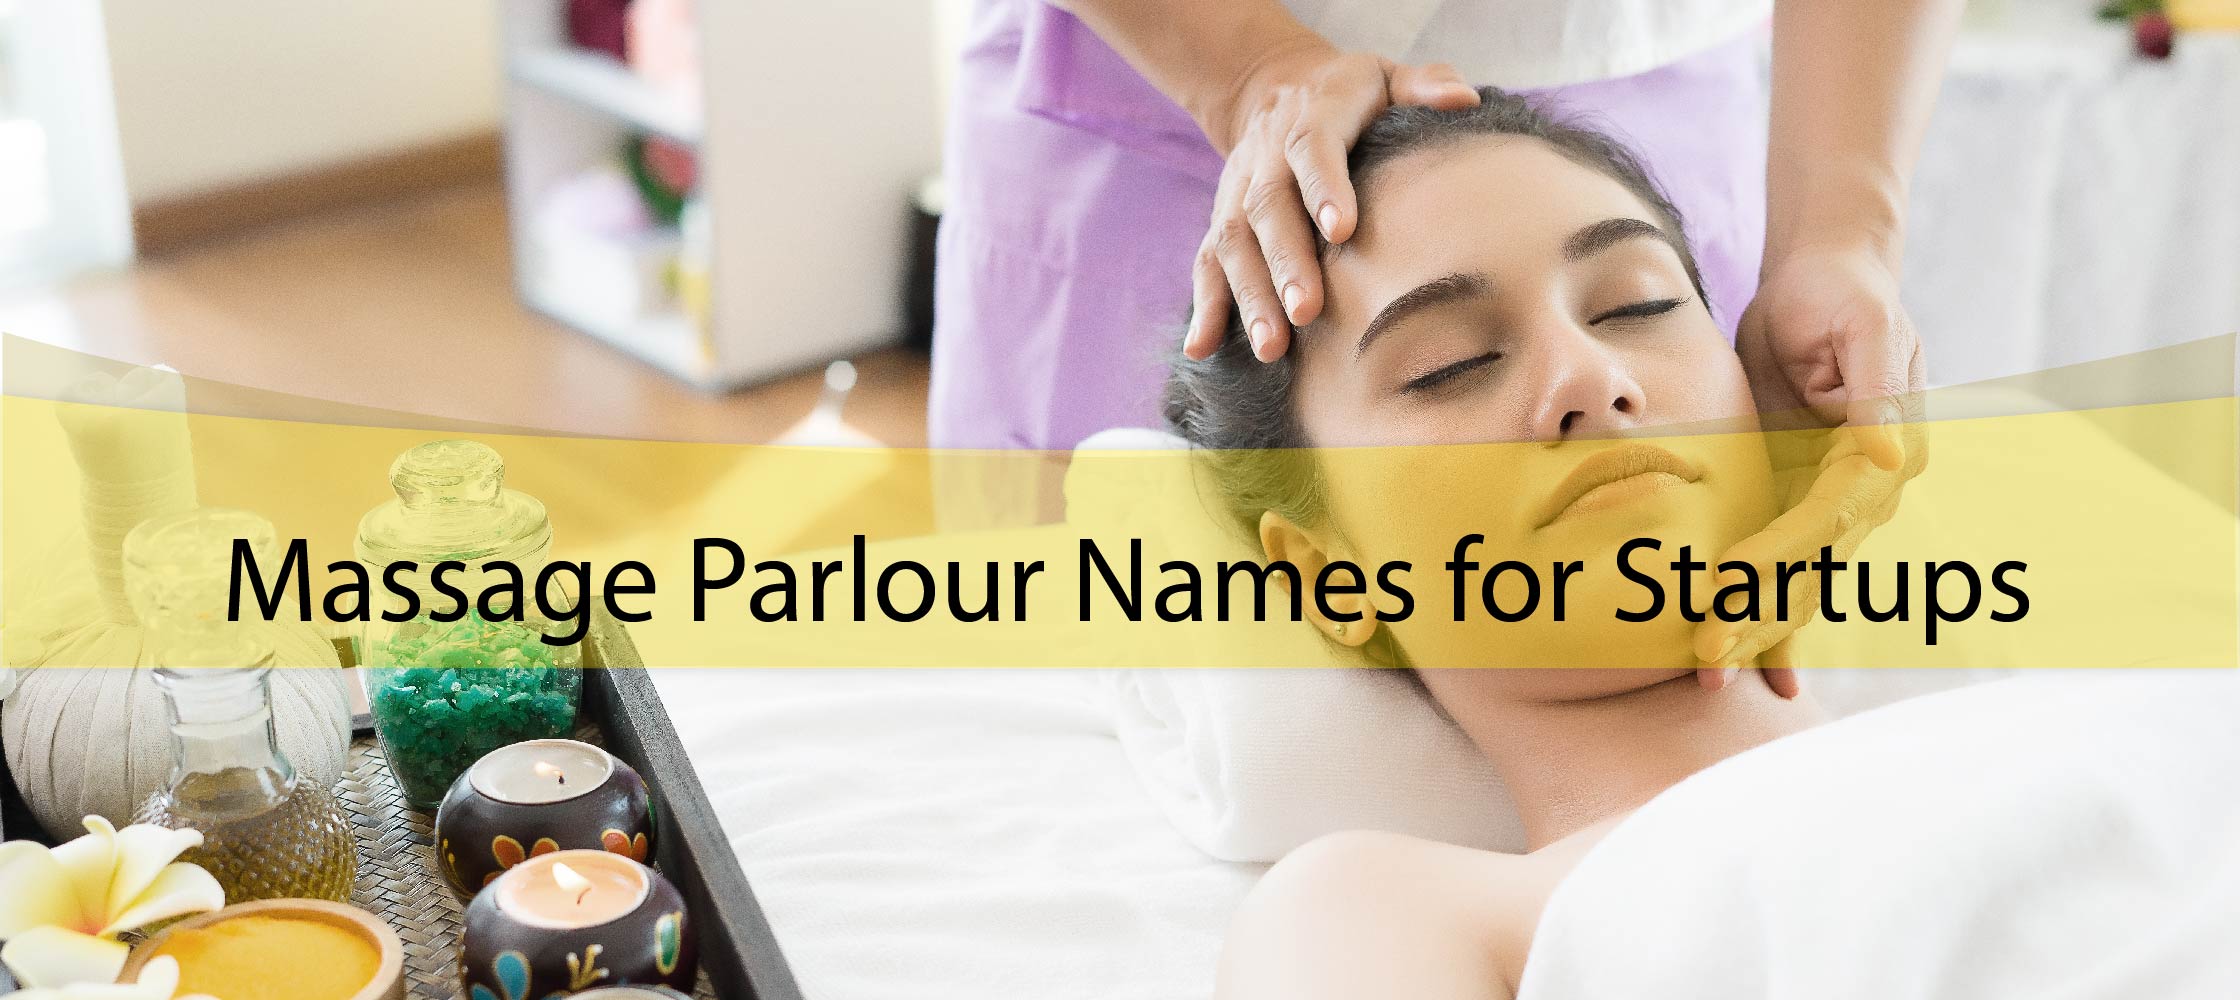 massage parlour names for startups